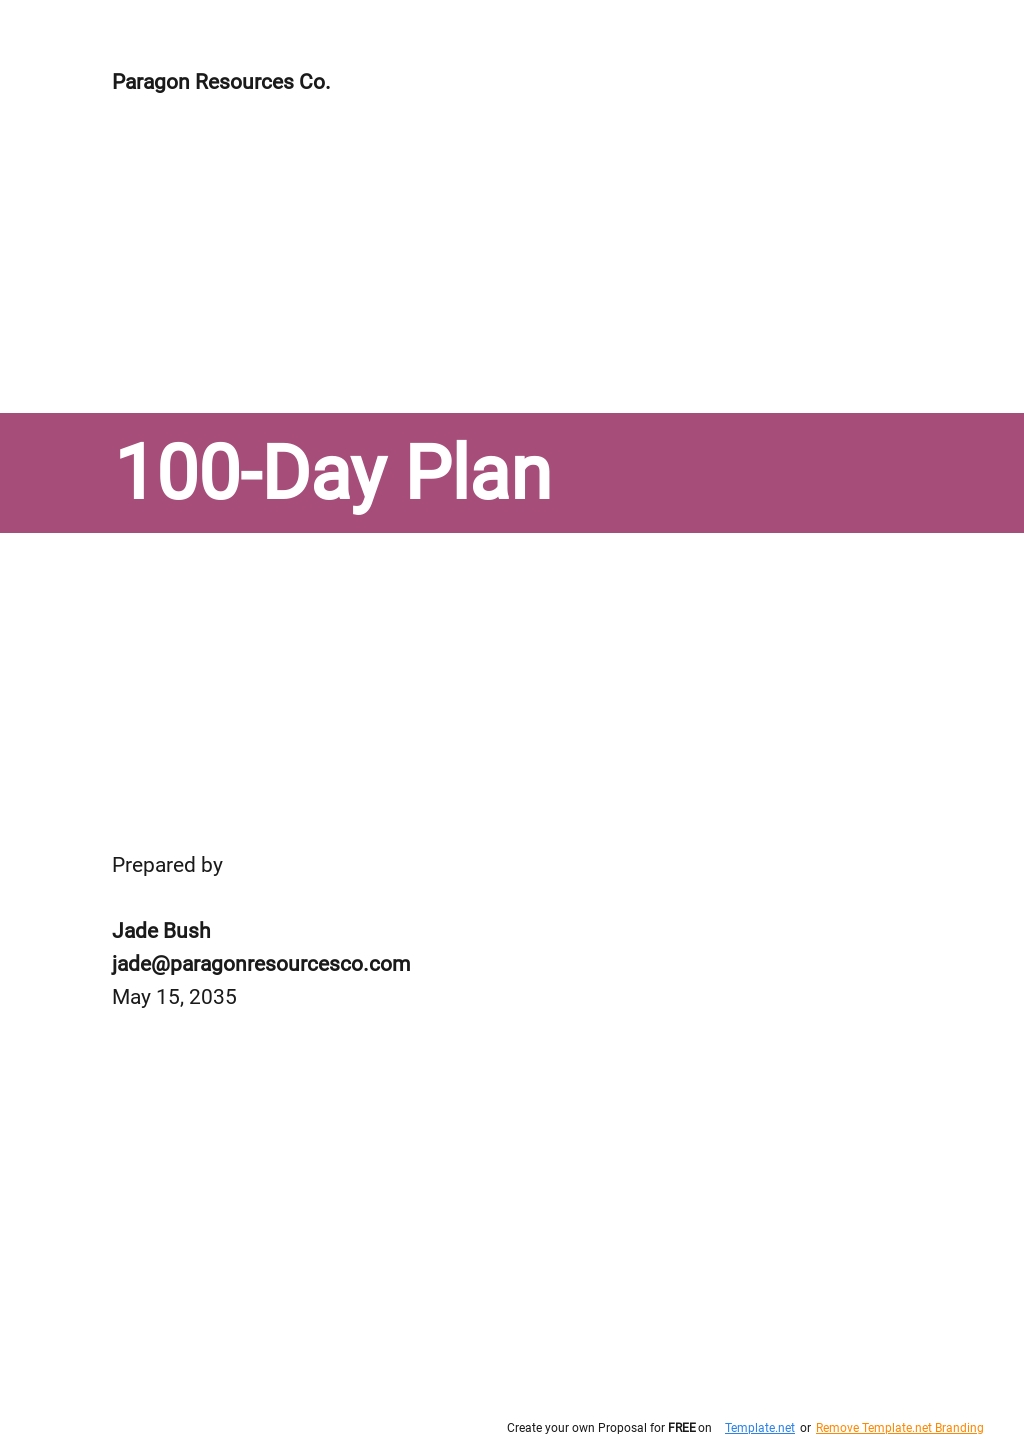 Sample 100 Day Plan Template.jpe